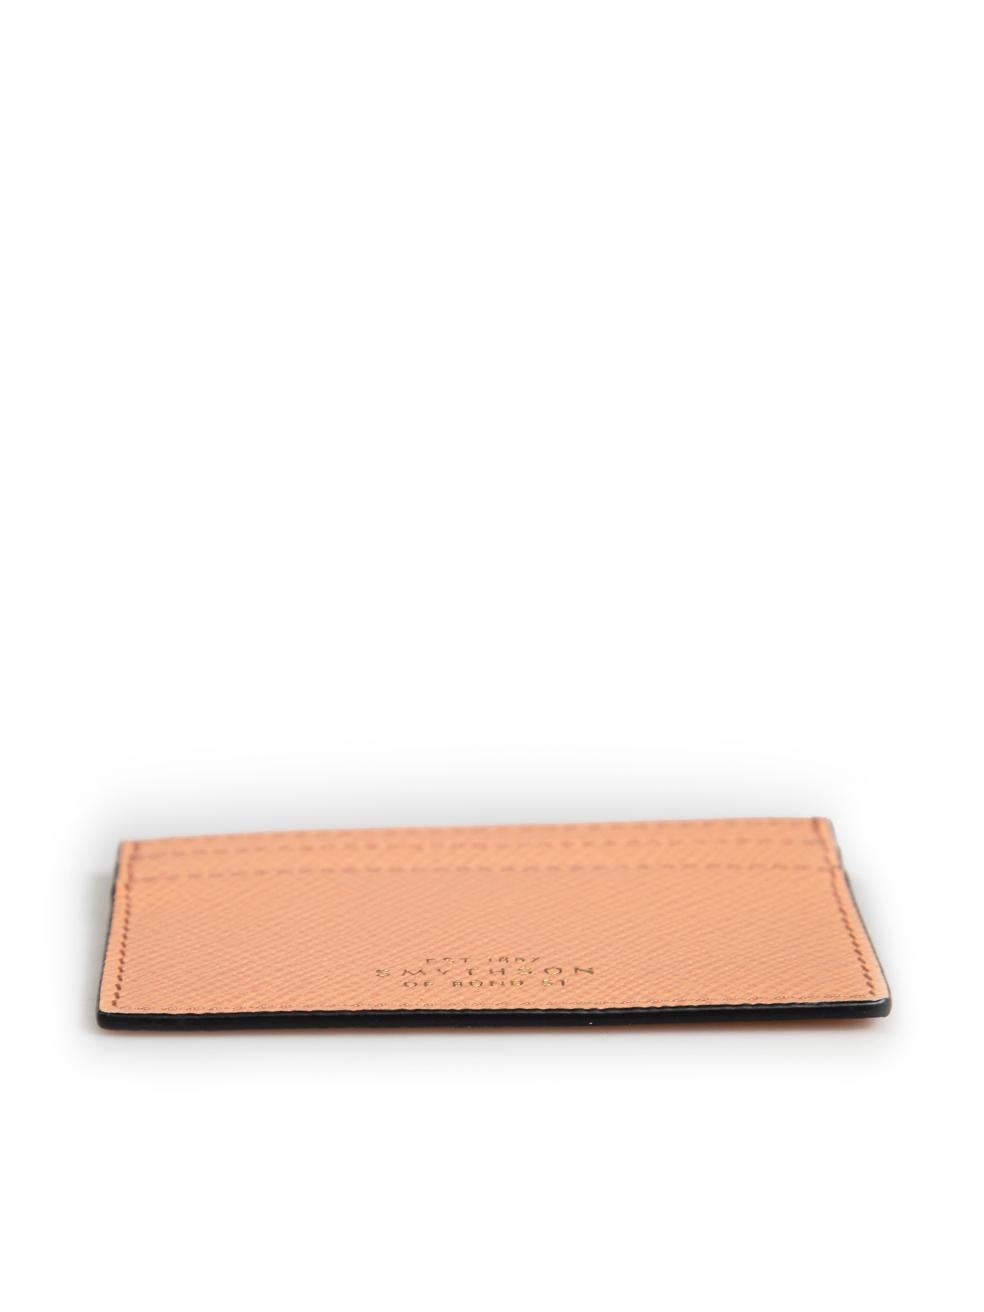 Women's Smythson Salmon Pink Leather Cardholder For Sale